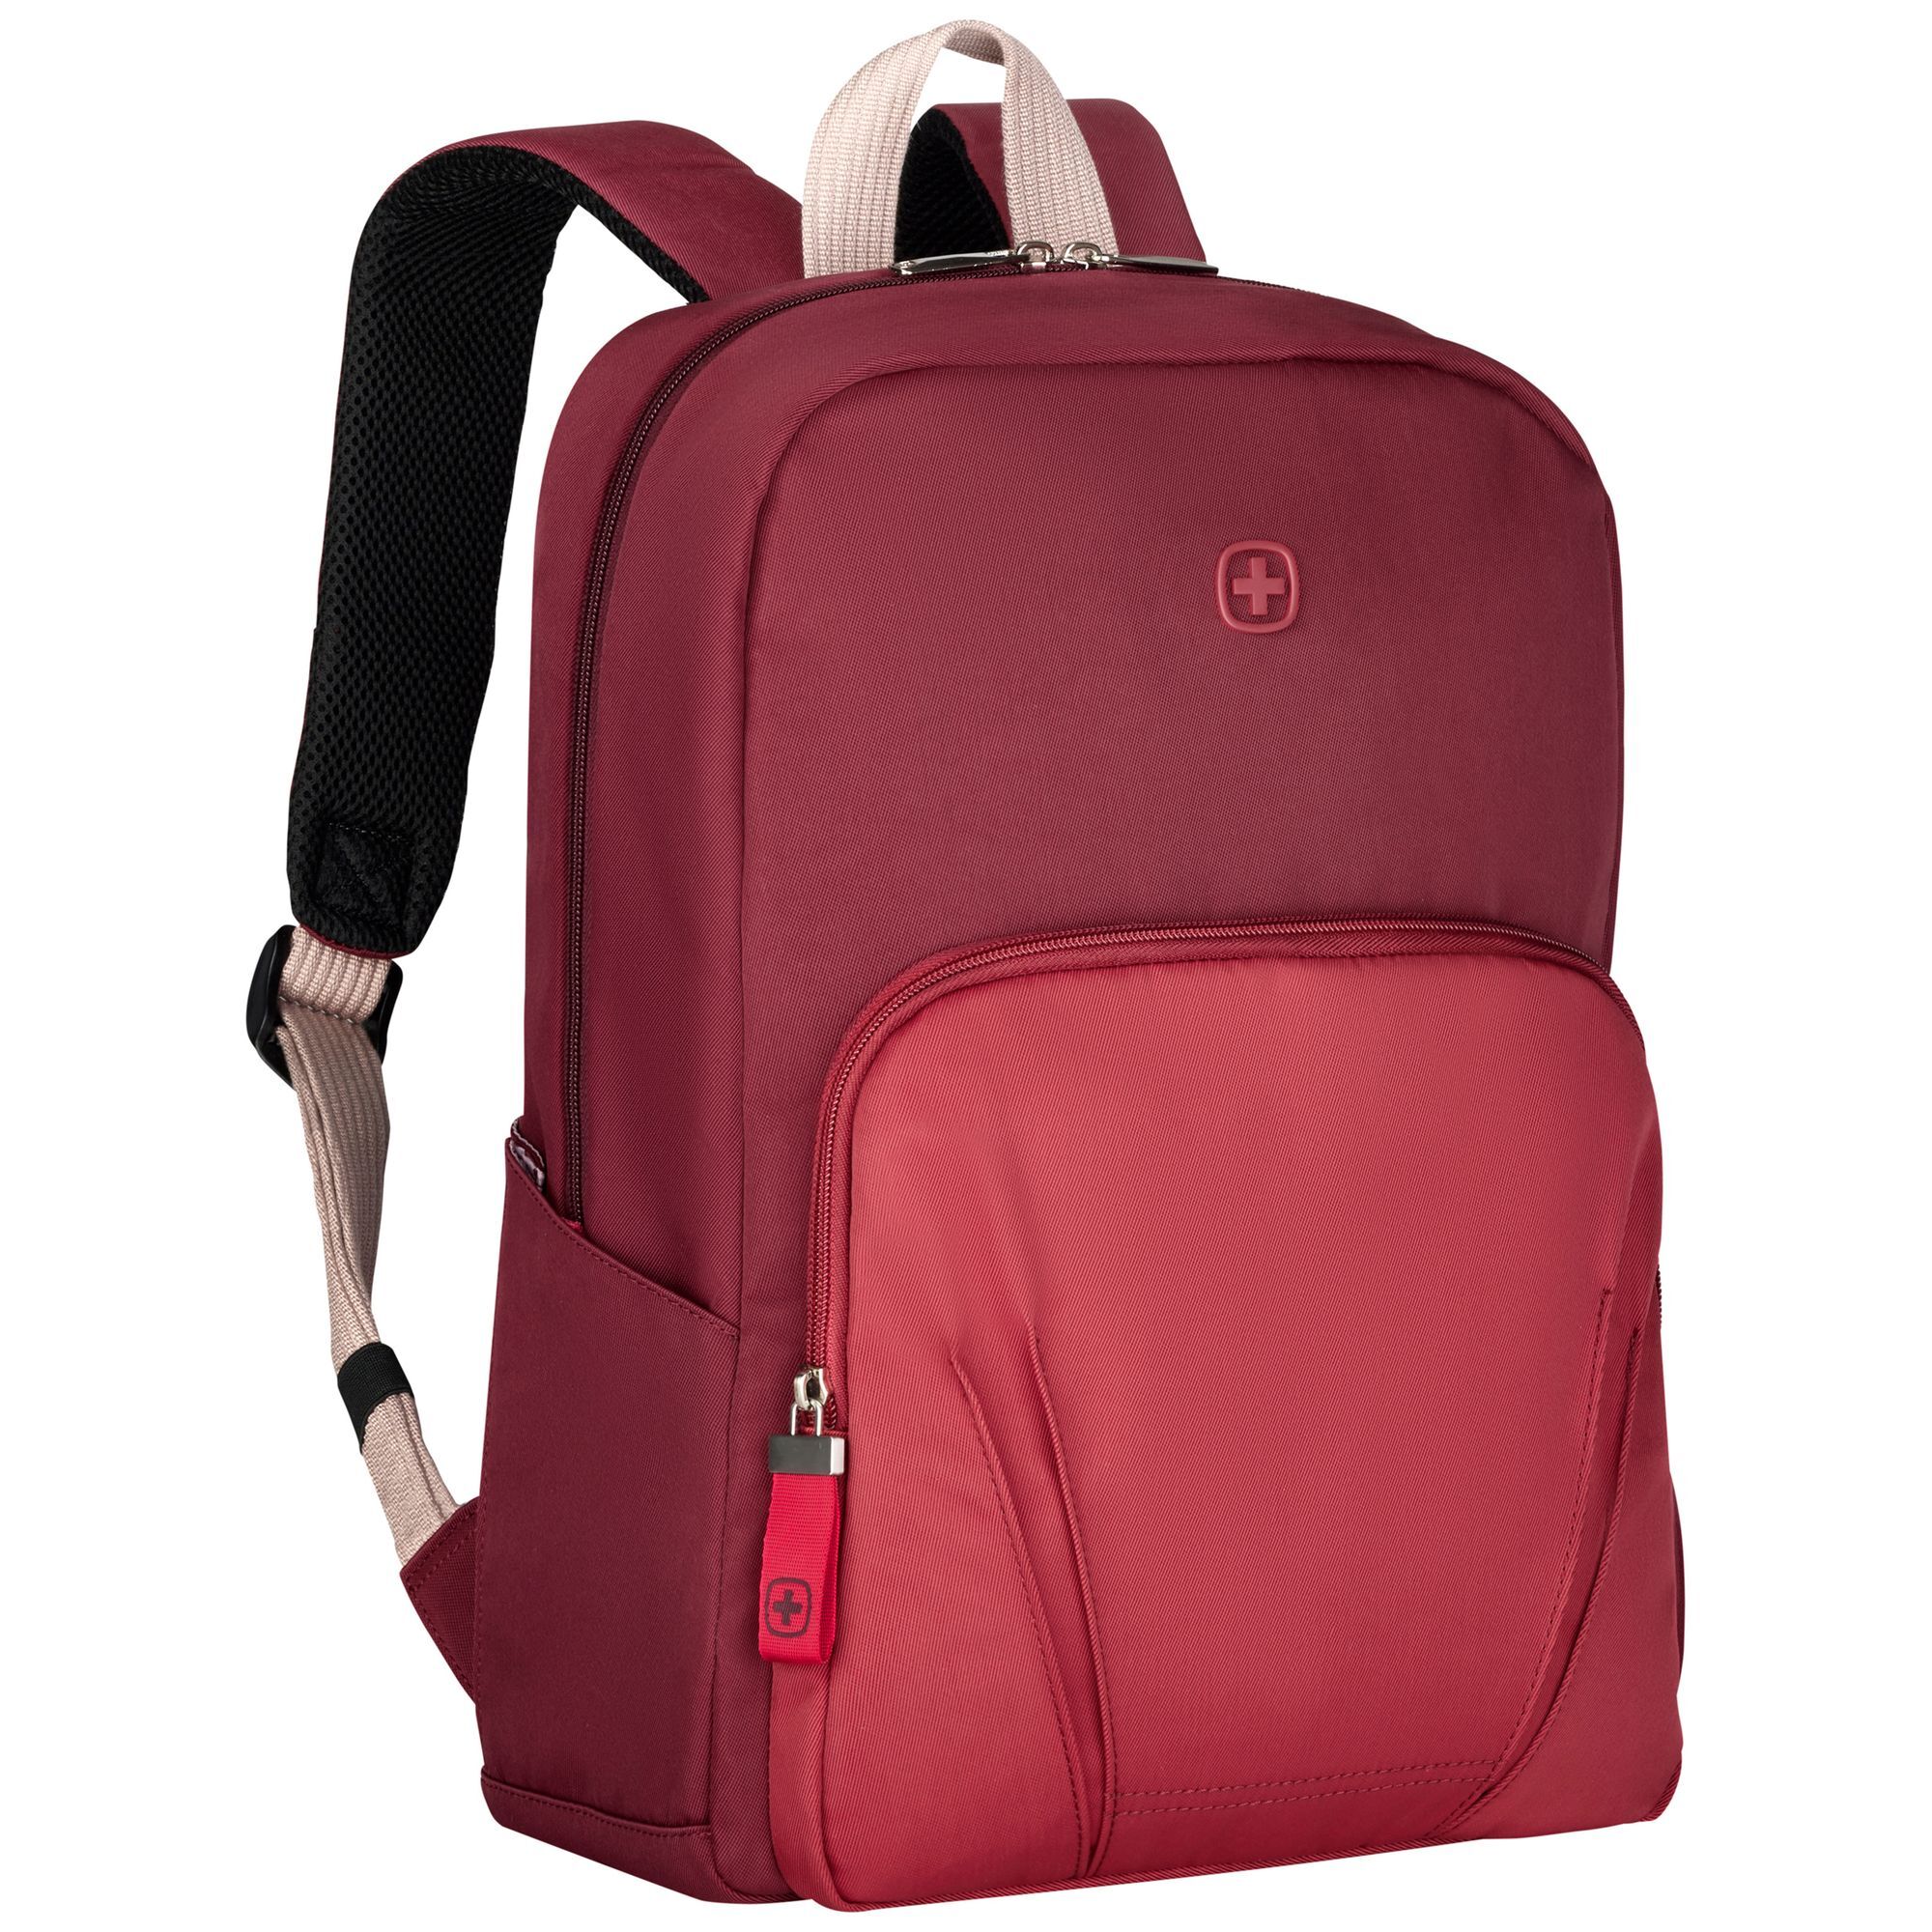 Рюкзак Wenger Motion 42 cm Laptopfach, цвет digital red рюкзак wenger trayl 45 cm laptopfach цвет gravity black